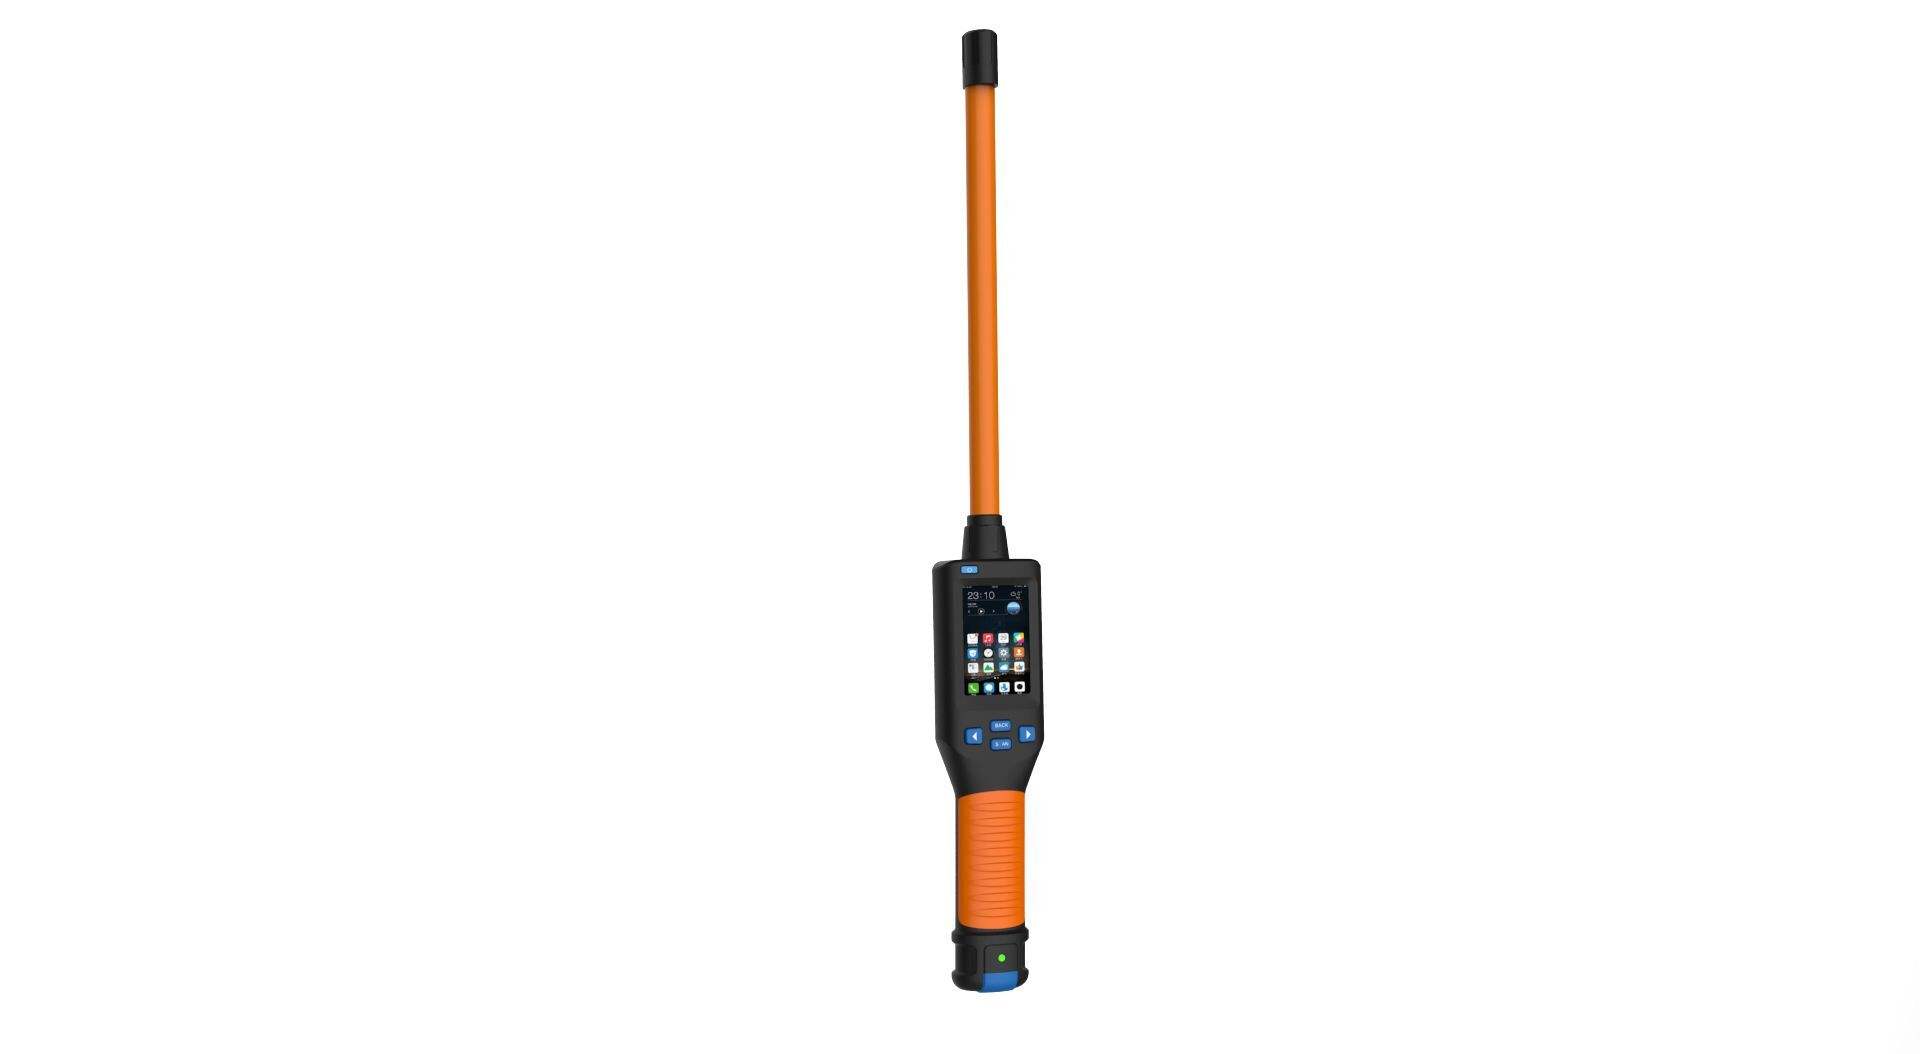 High Quality Cheap Price 125khz/134.2khz RFID Animal Antenna Reader